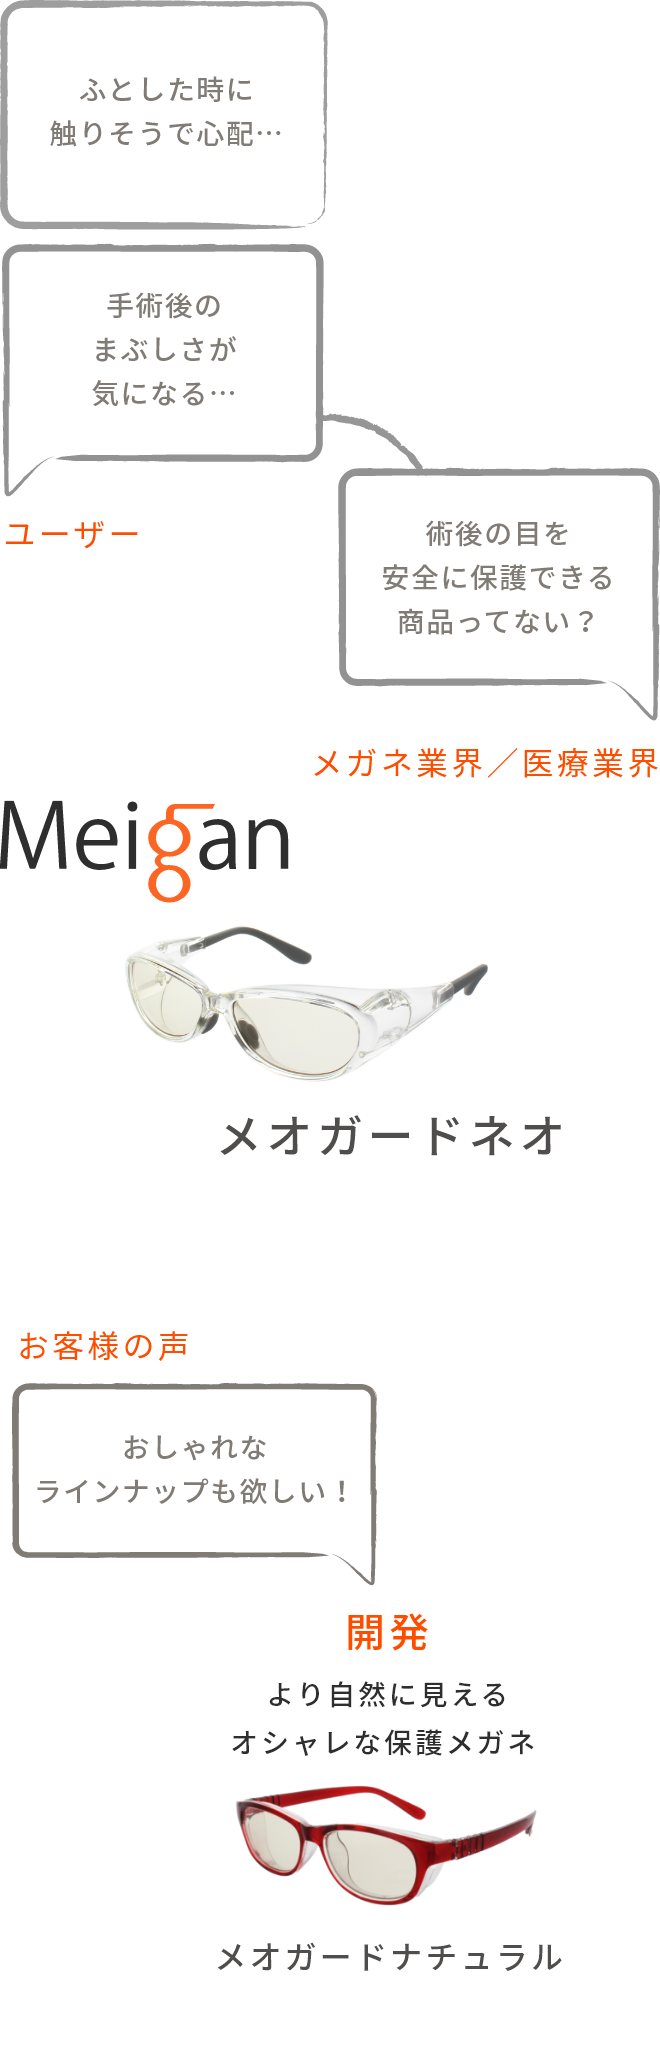 Meigan メオガードネオ メガネ業界・医療業界「術後の目をガードできない？」 ユーザー「術後の目を触りそうで心配…」 / ネオガードナチュラル より自然に見えるオシャレな保護メガネの開発 クチコミ「おしゃれなラインナップも欲しい！」